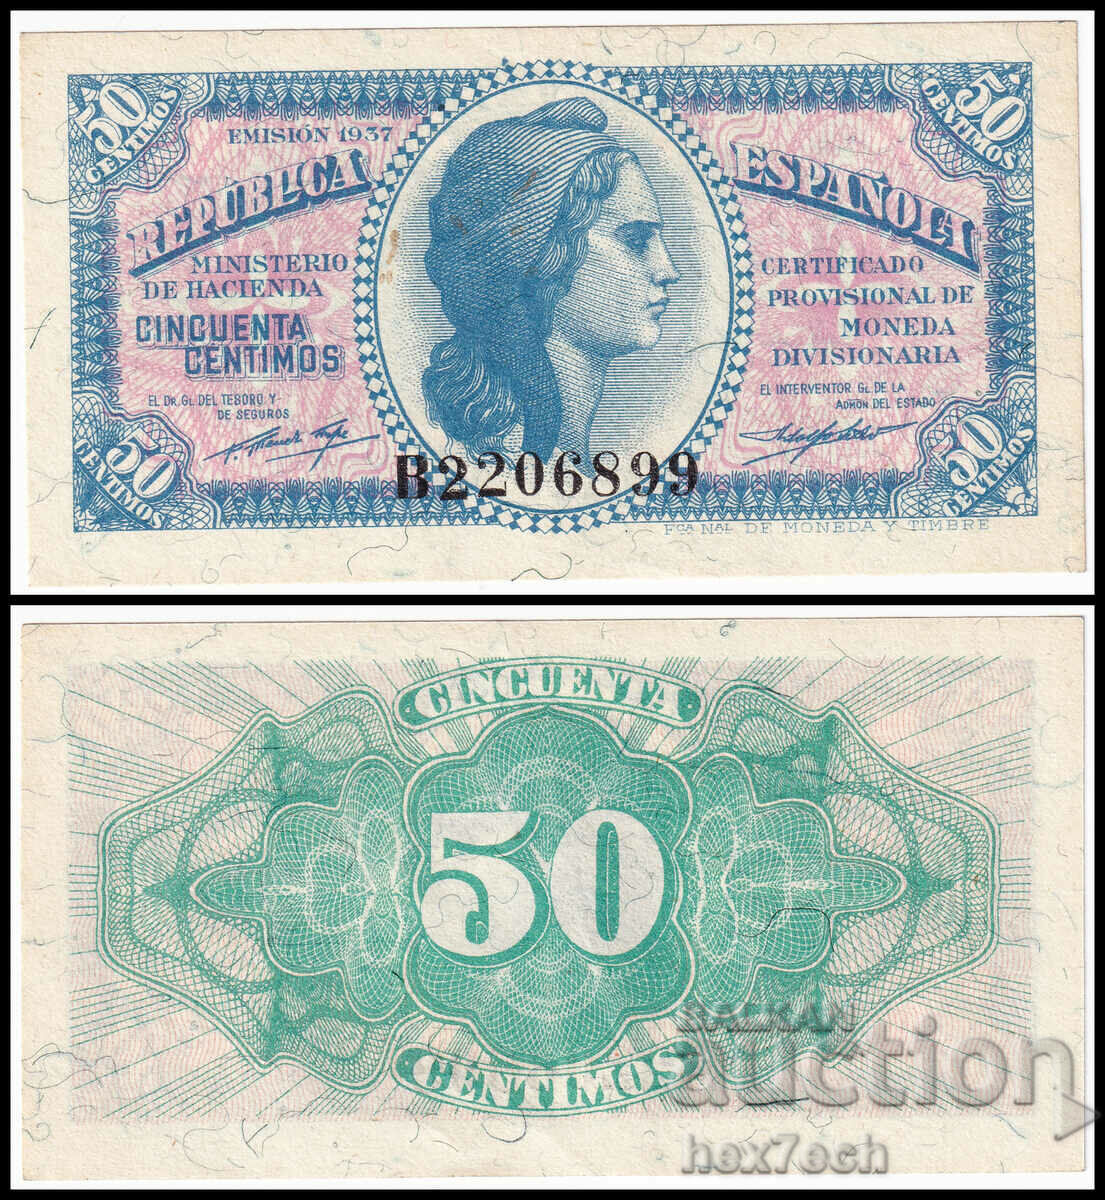 ❤️ ⭐ Spain 1937 50 centimos ⭐ ❤️